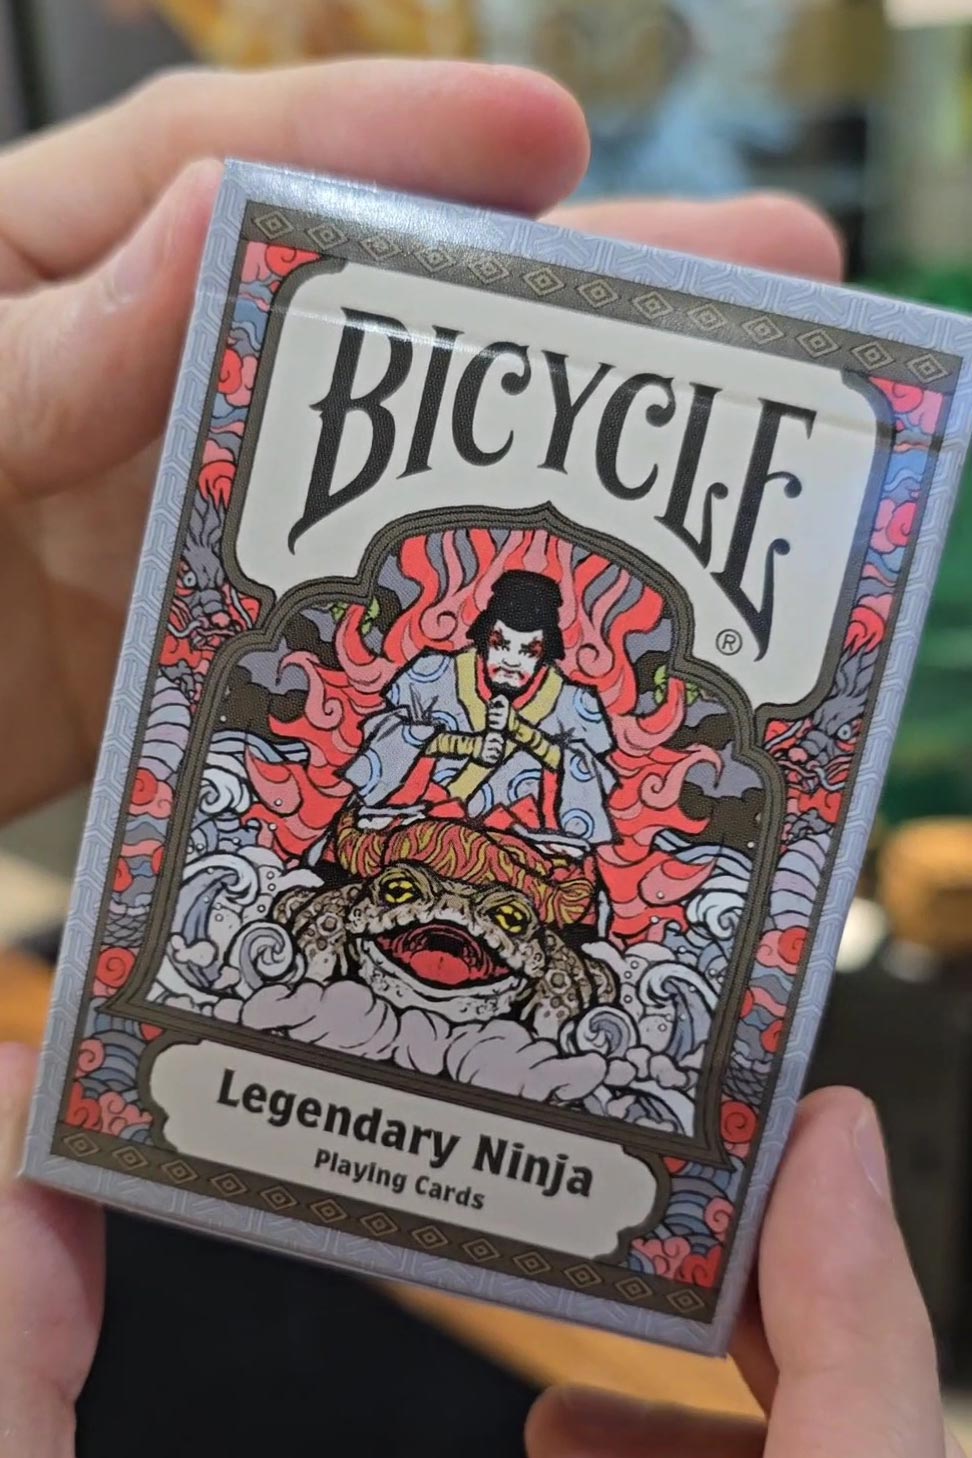 Opening Bicycle Legendary Ninja Playing Cards